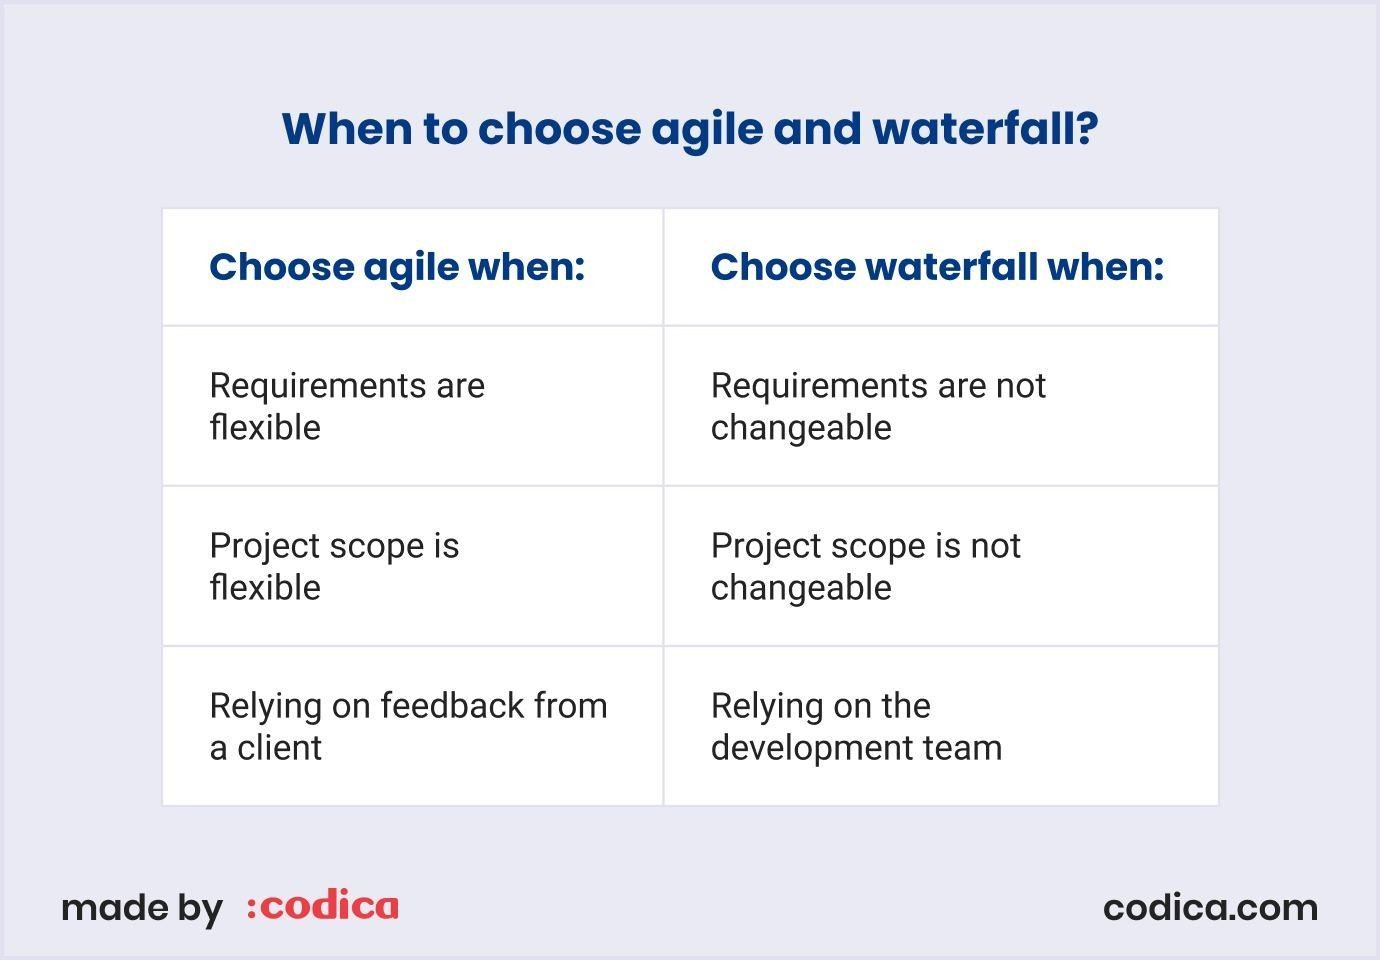 The agile vs waterfall software development models